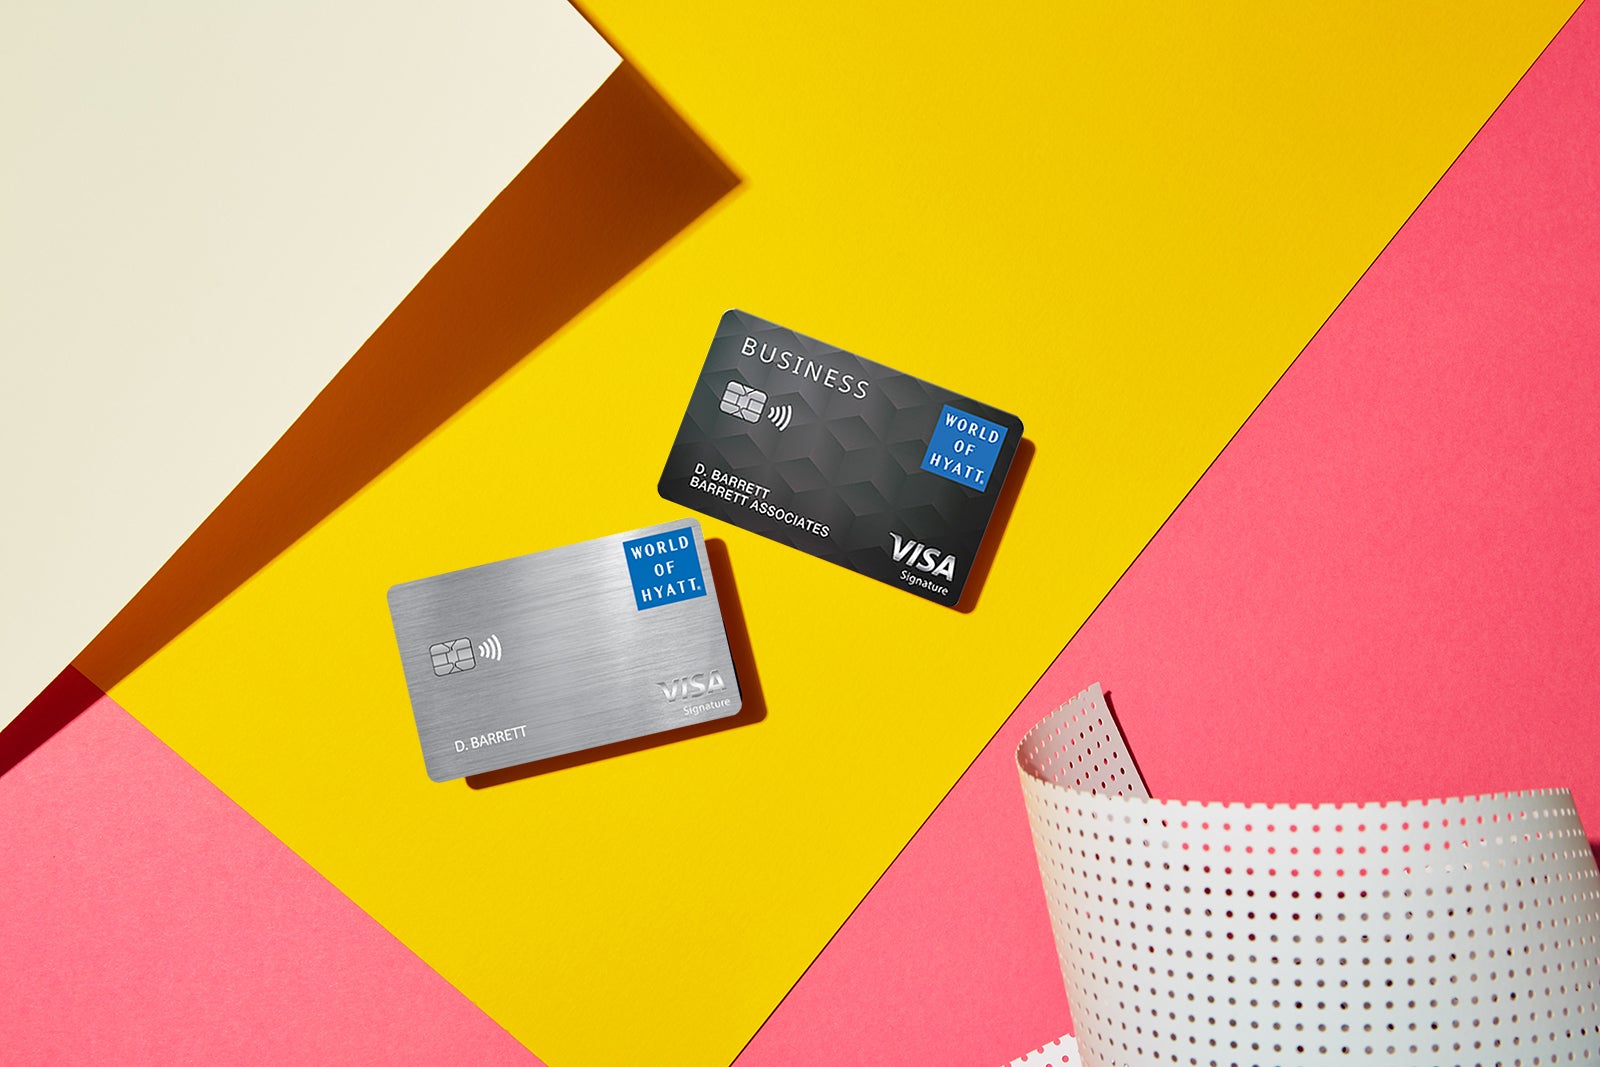 credit-card-showdown-world-of-hyatt-card-versus-world-of-hyatt